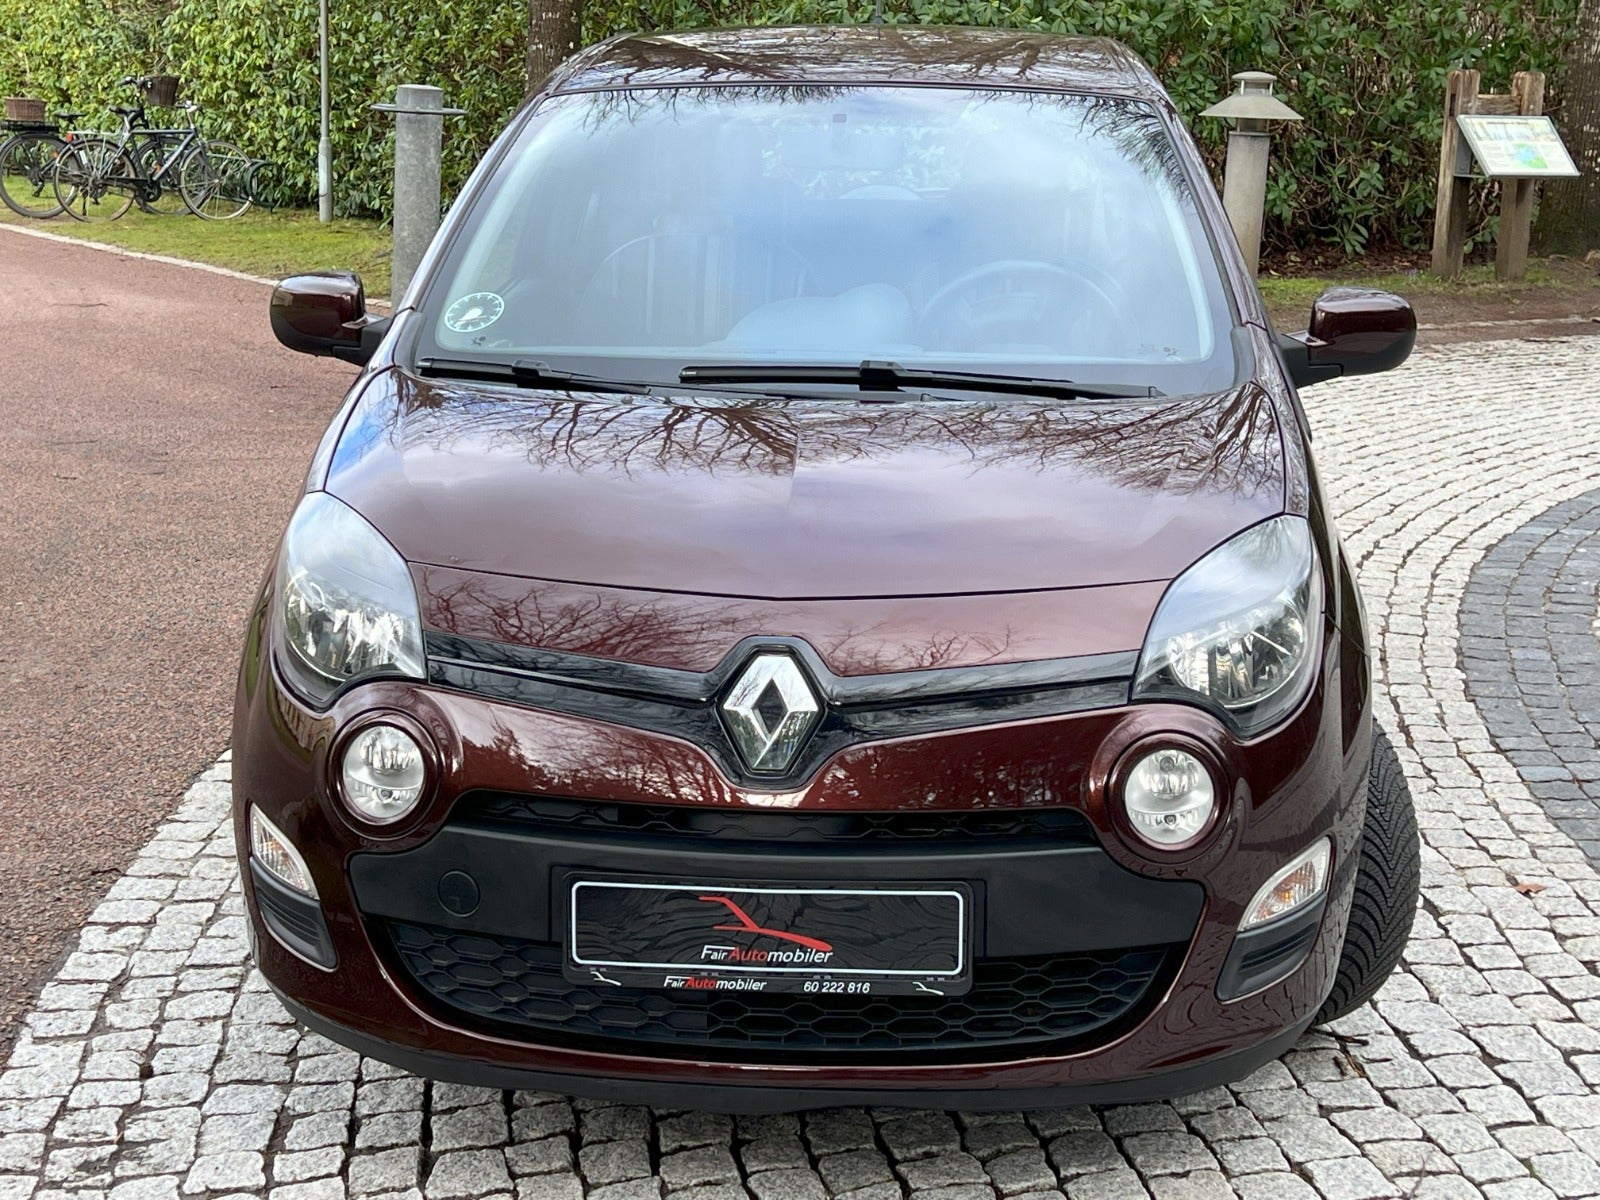 Renault Twingo 1,2 16V Expression Benzin modelår 2013 km